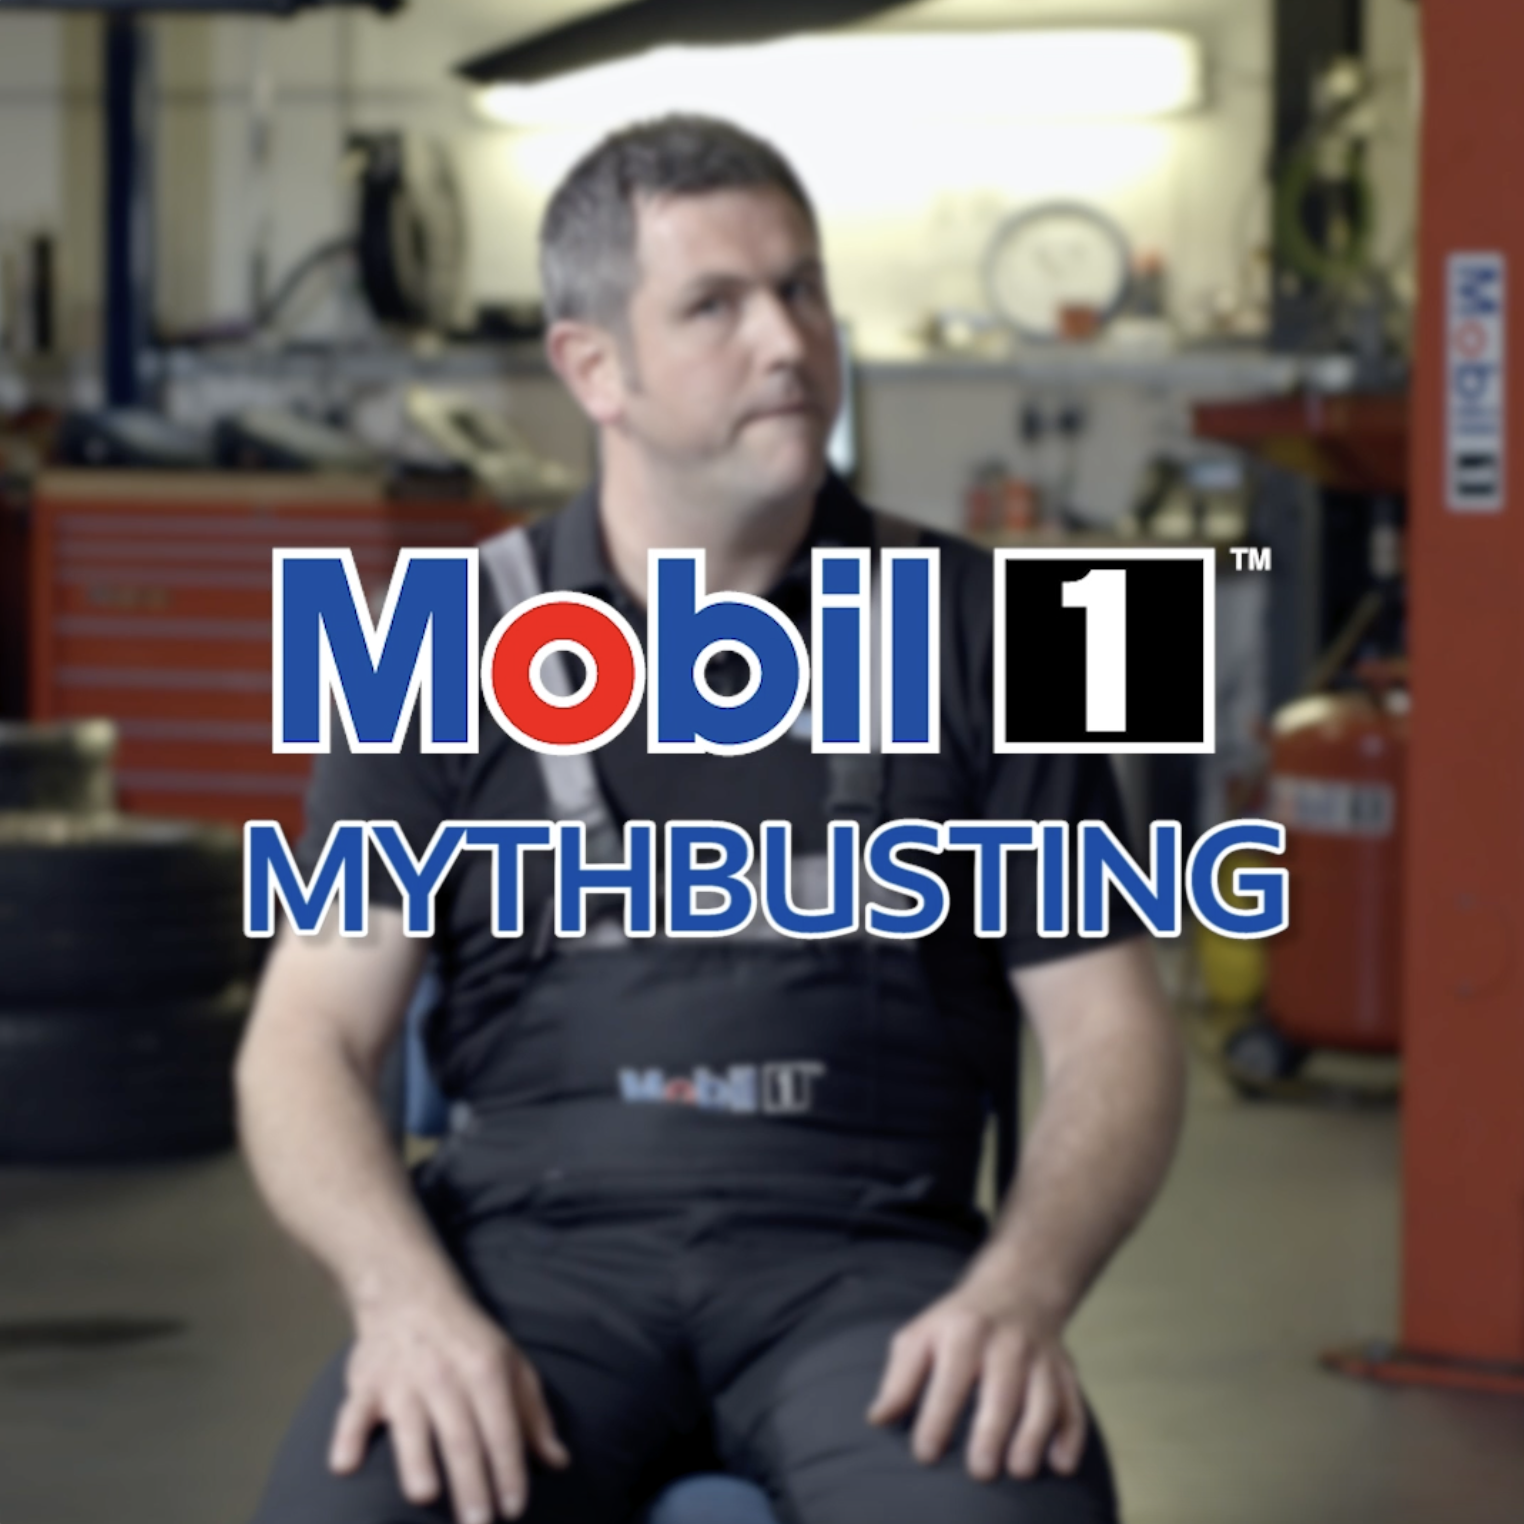 Mobil1 Mythbusting